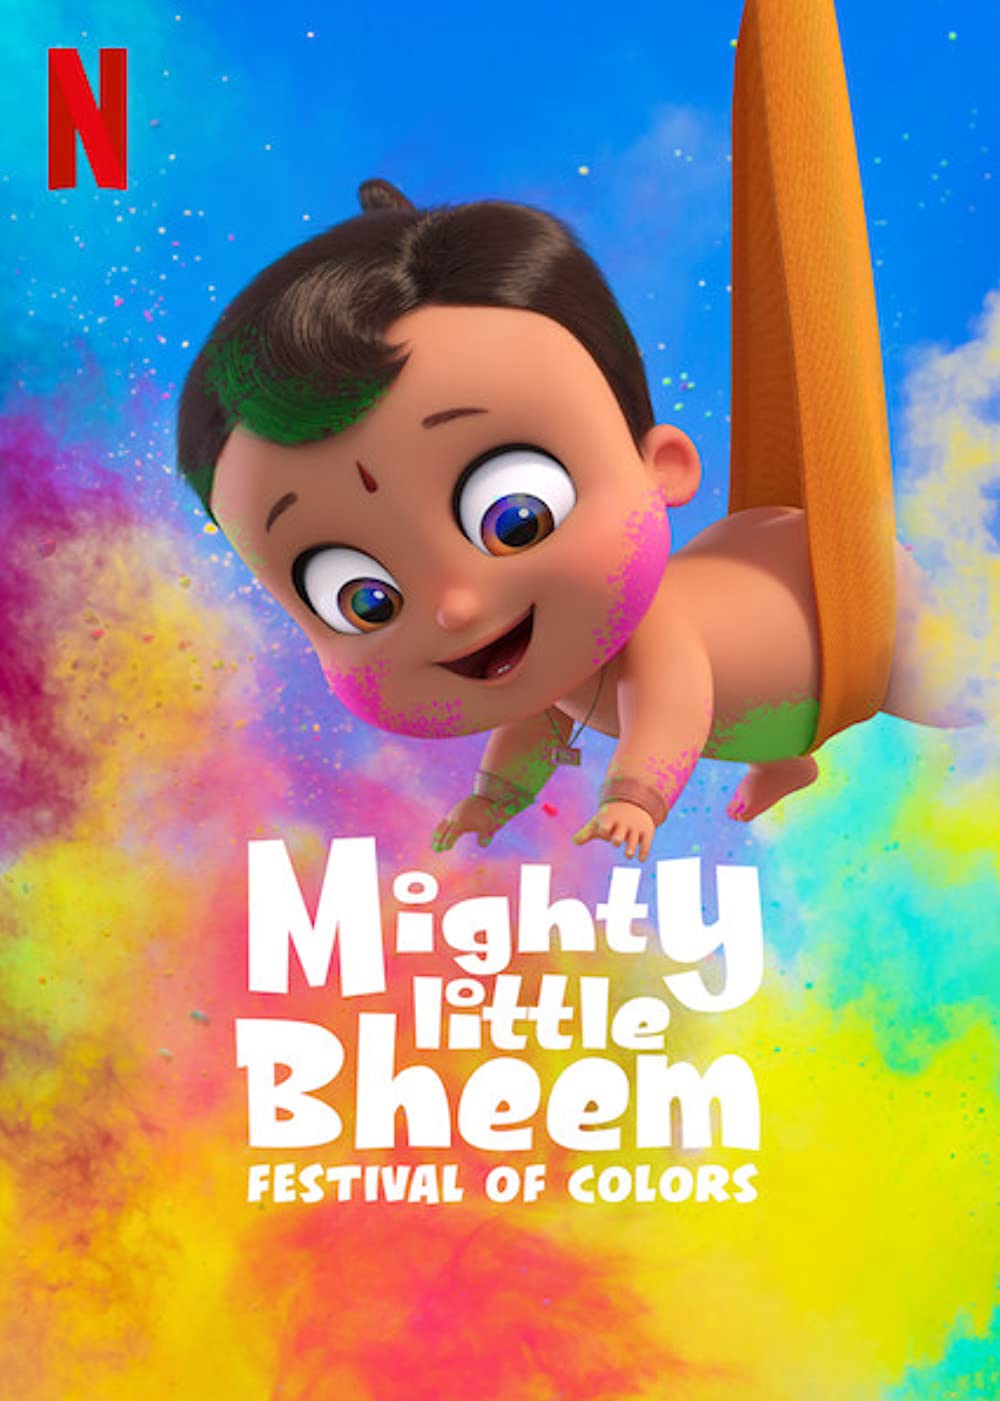 Poster Phim Nhóc Bheem quả cảm: Lễ hội sắc màu (Mighty Little Bheem: Festival of Colors)